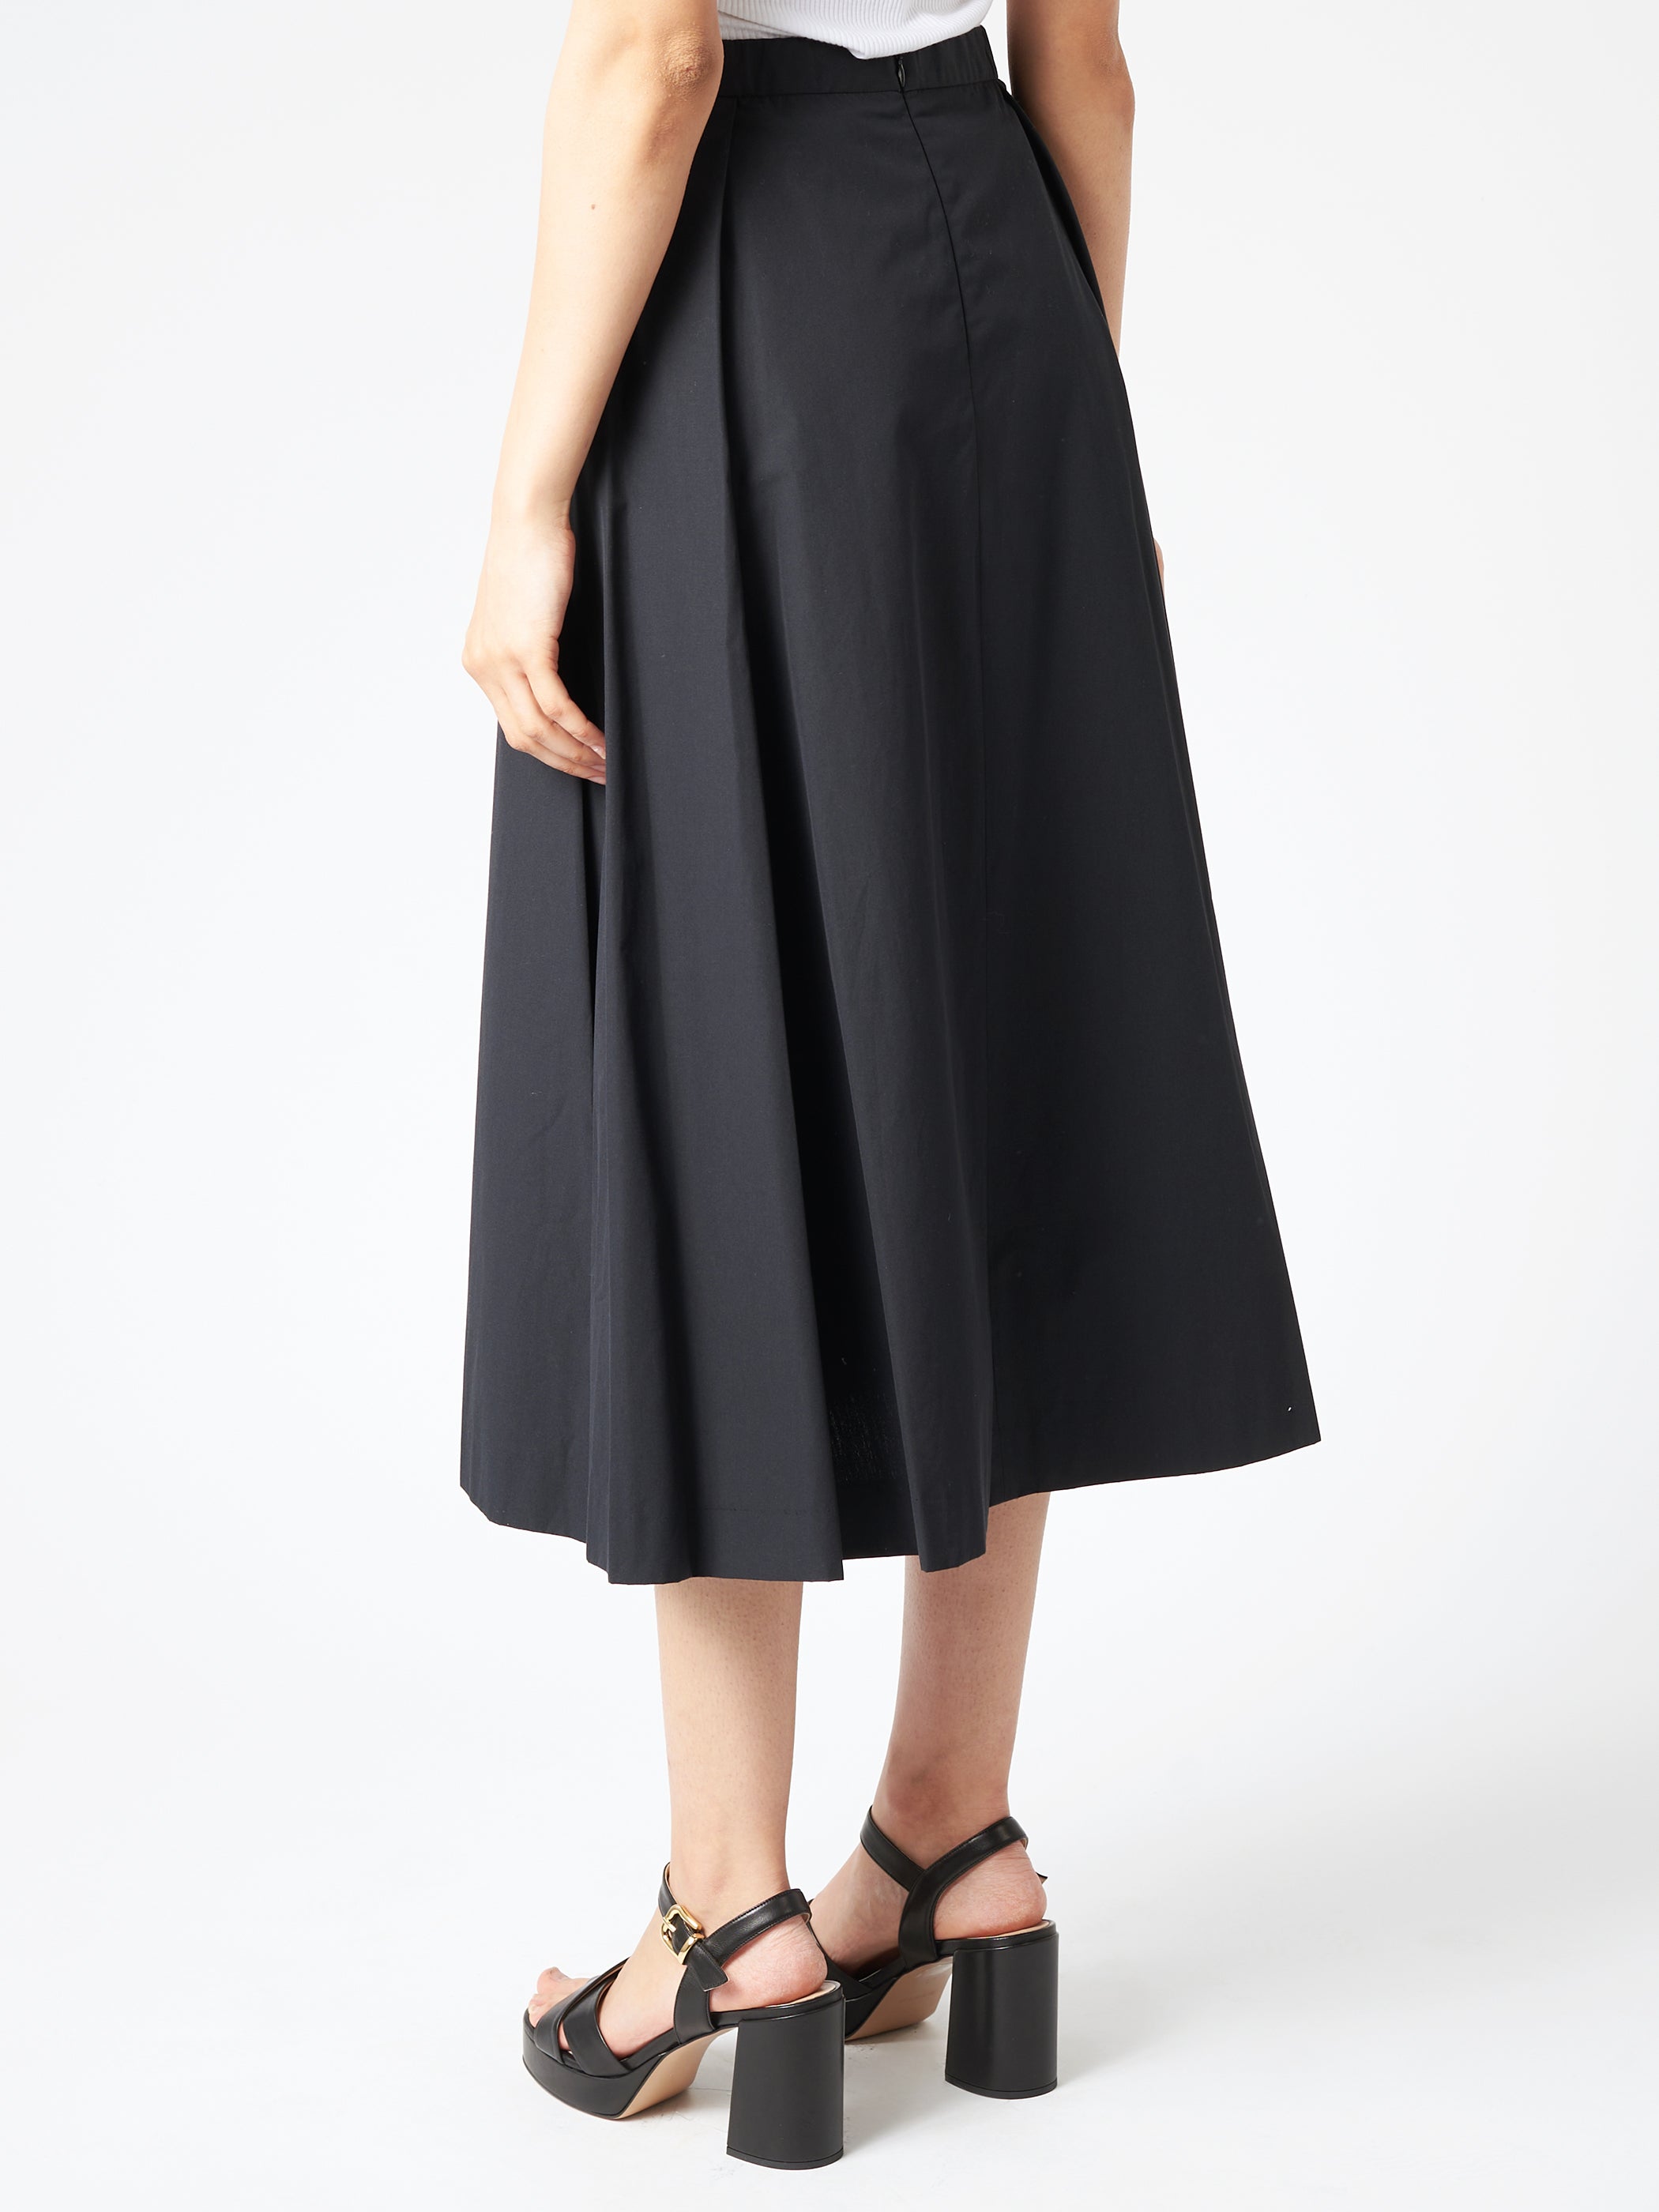 Decagon Skirt